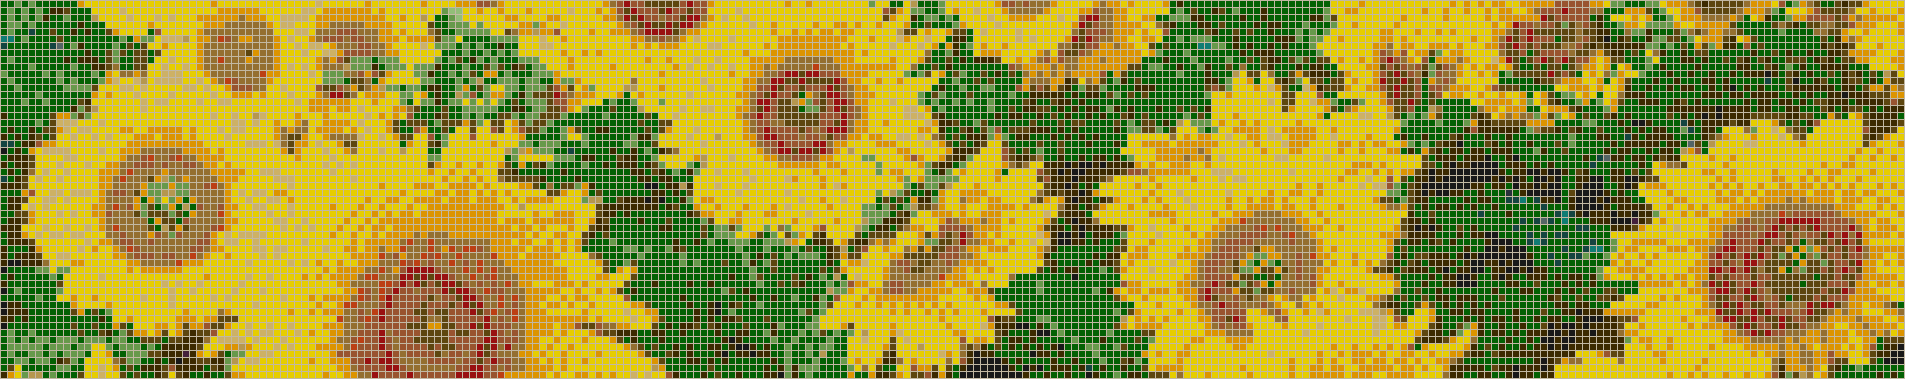 Sunflowers - Mosaic Tile Picture Art